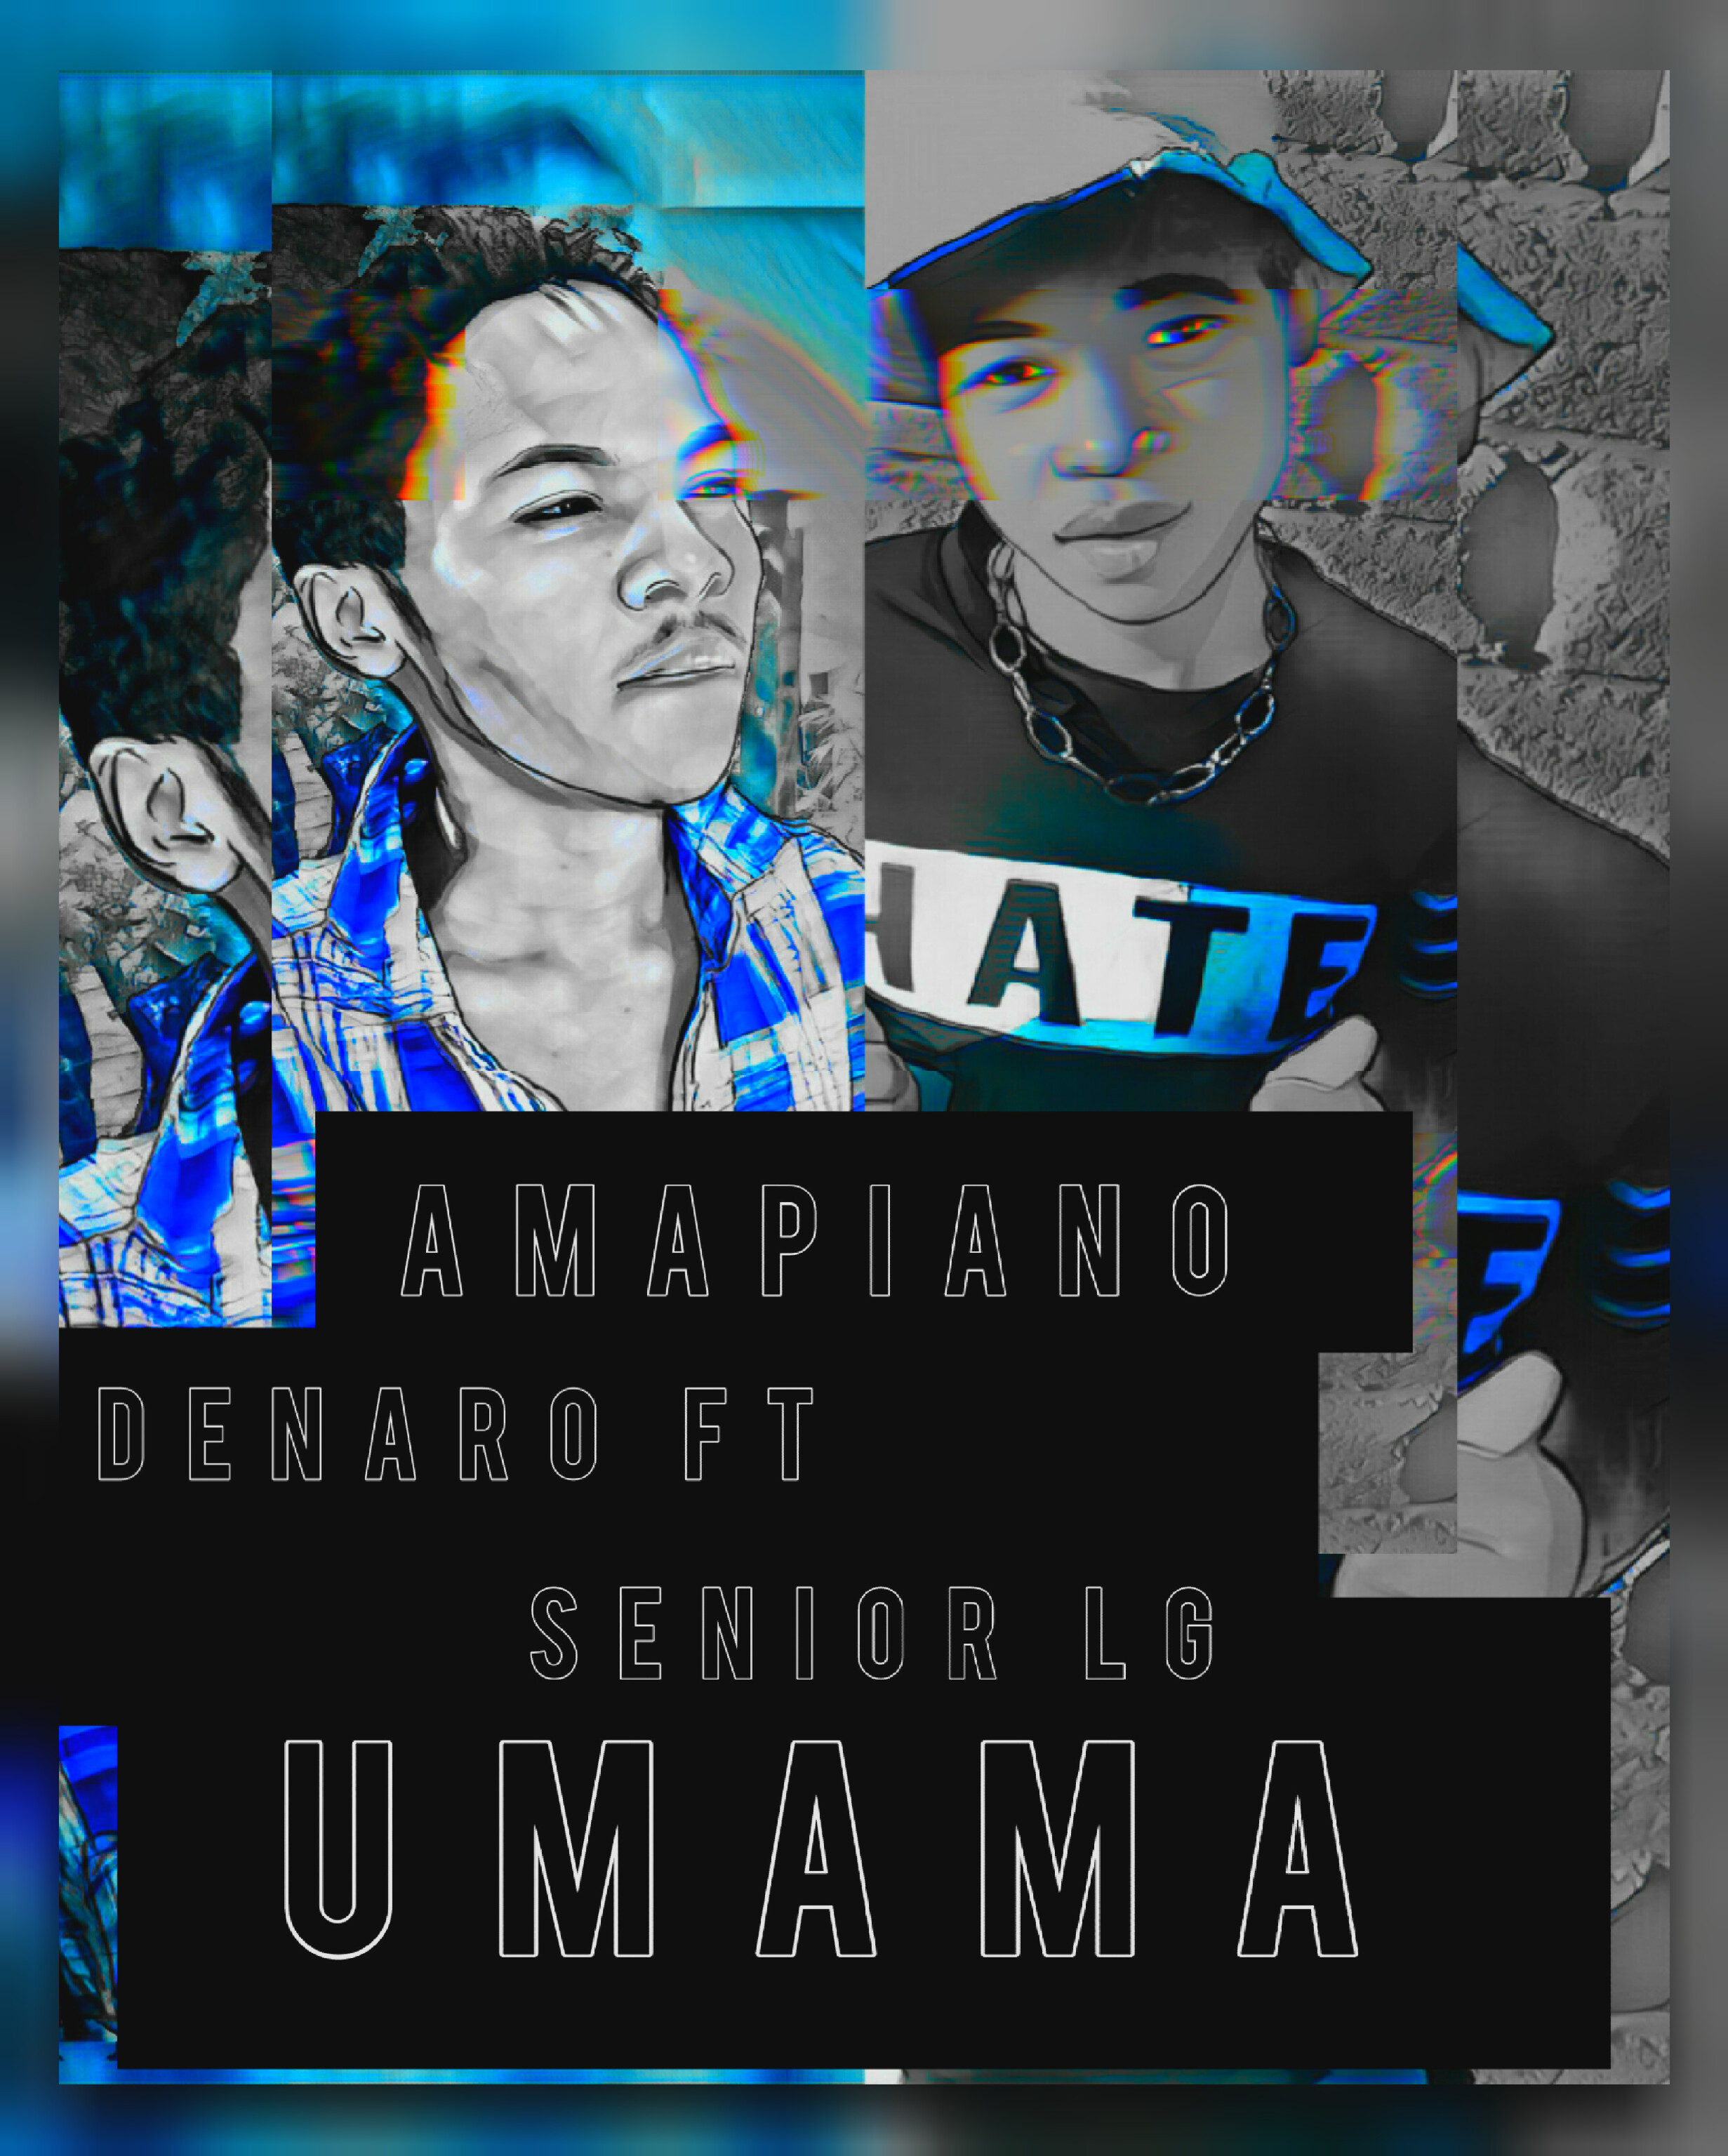 Umama - Denaro ft Senior LG